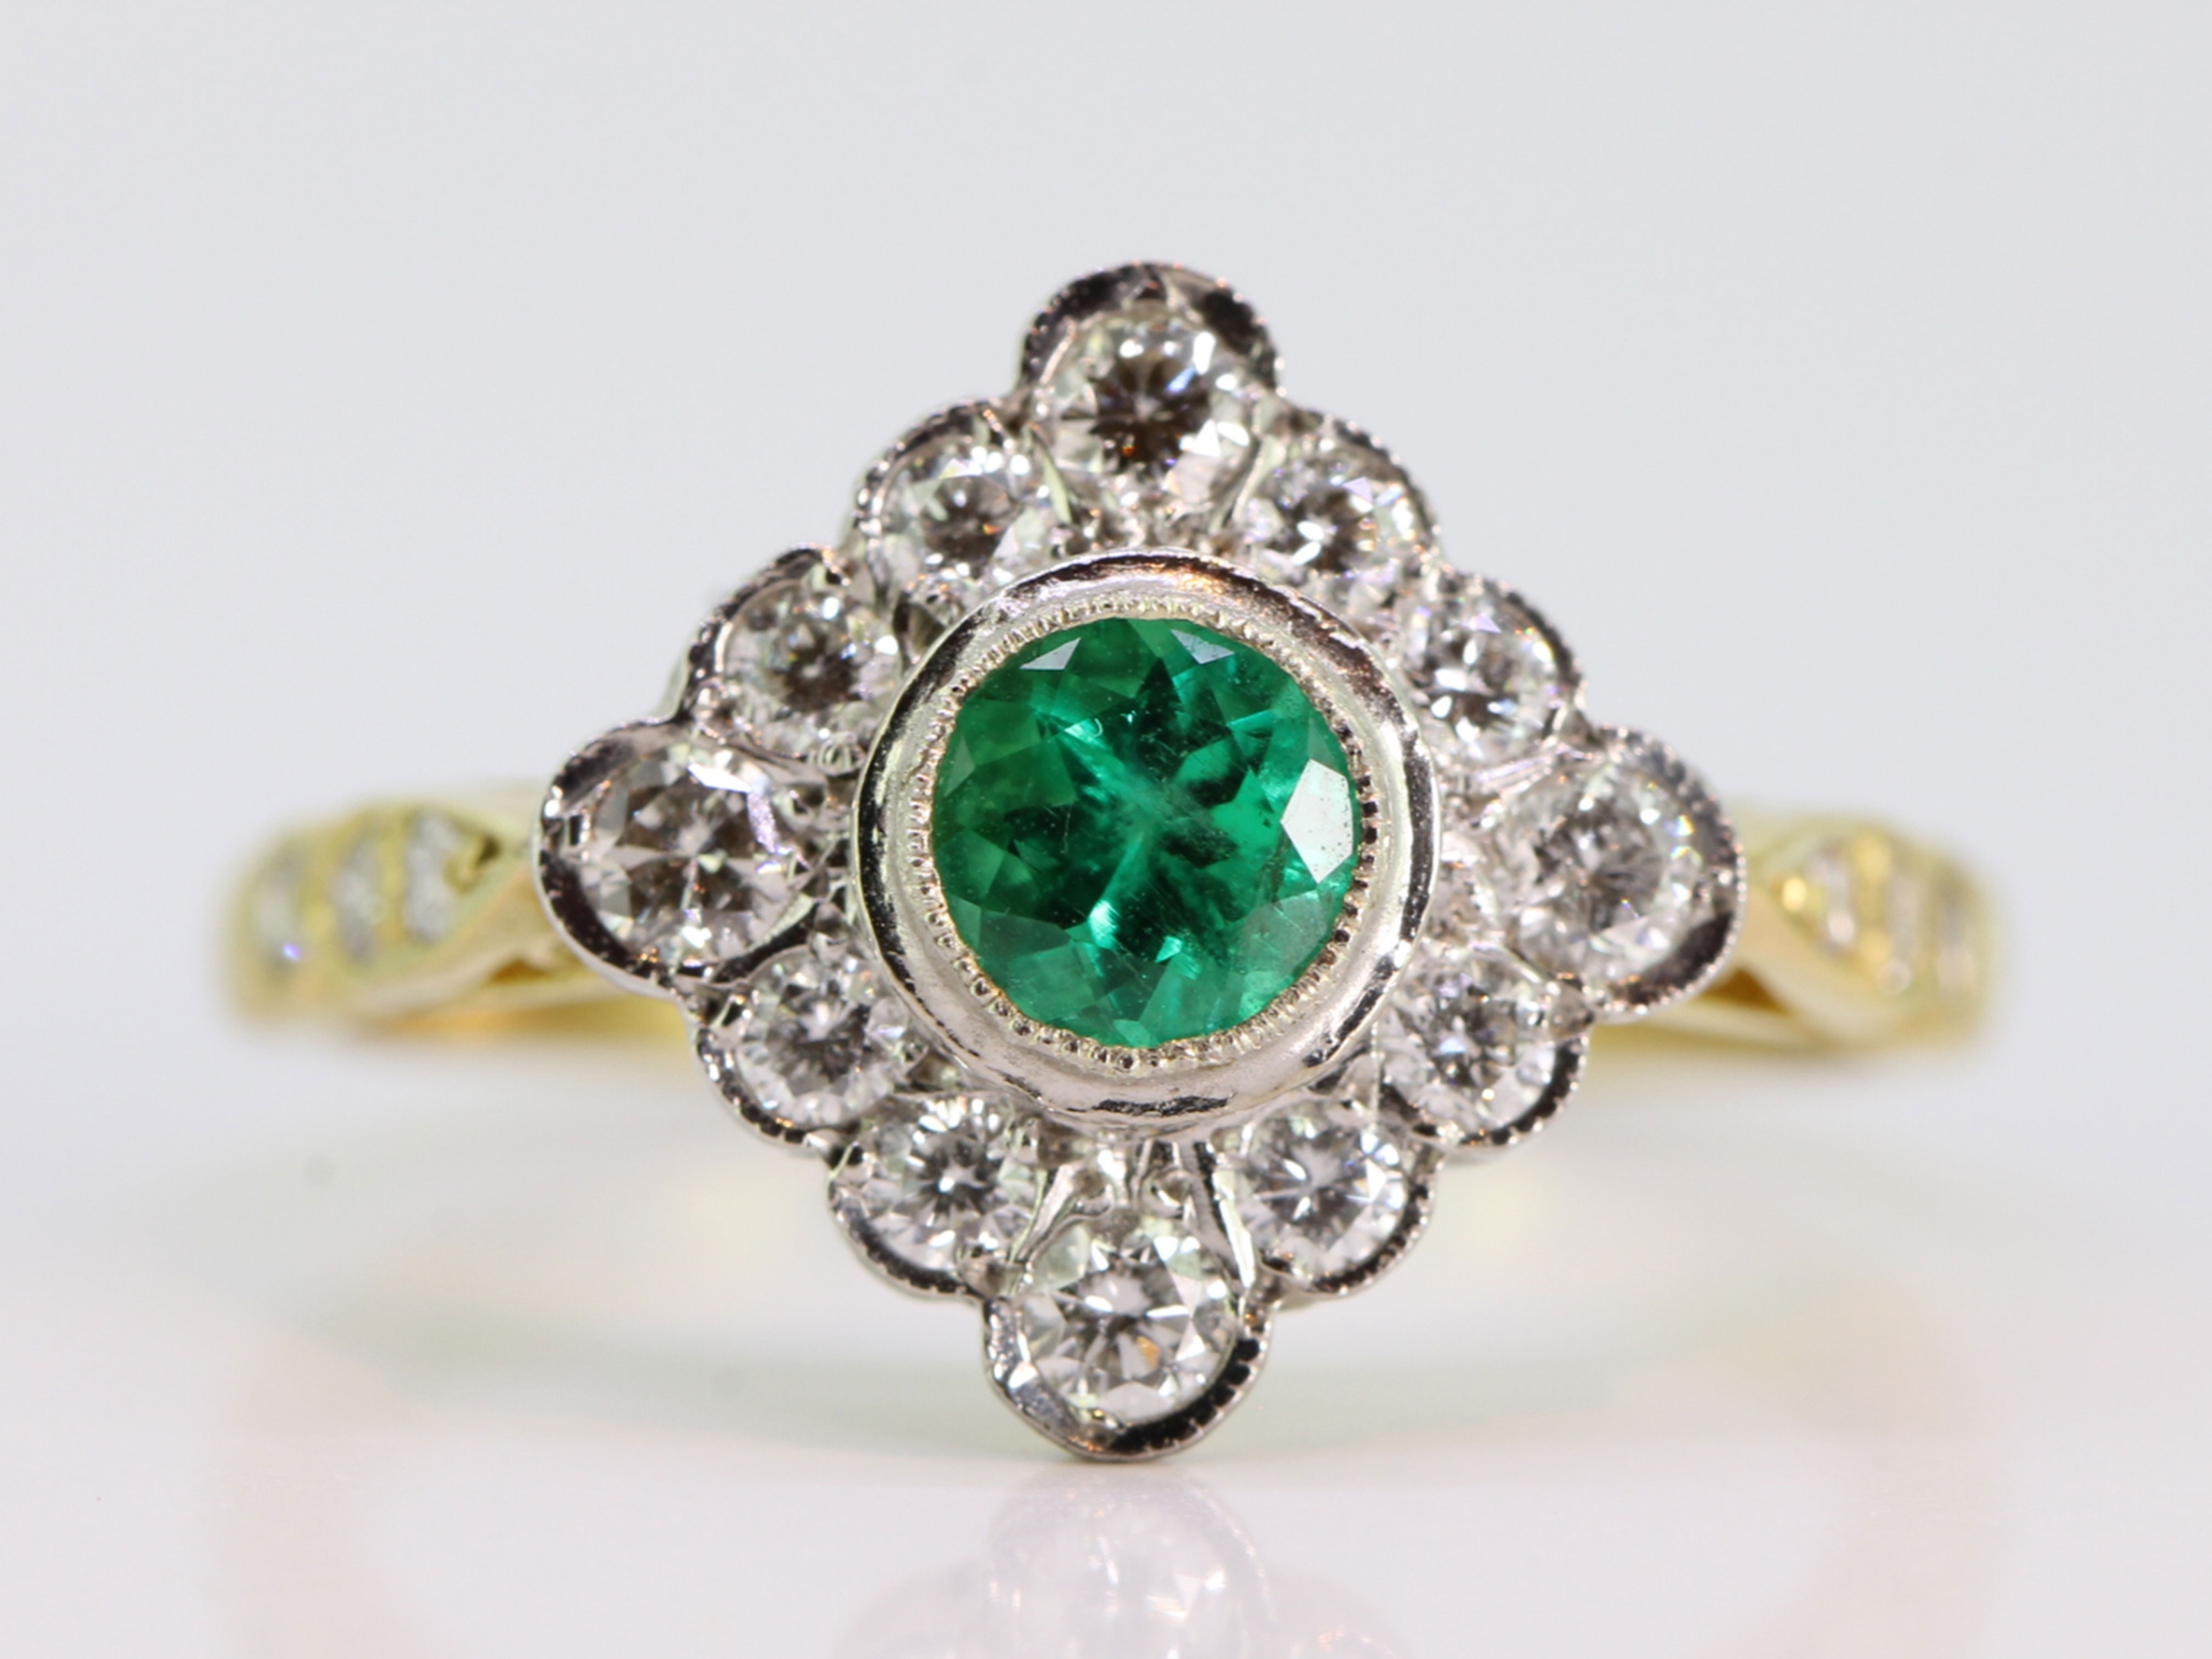  stunning emerald and diamond art deco inspired 18 carat gold ring